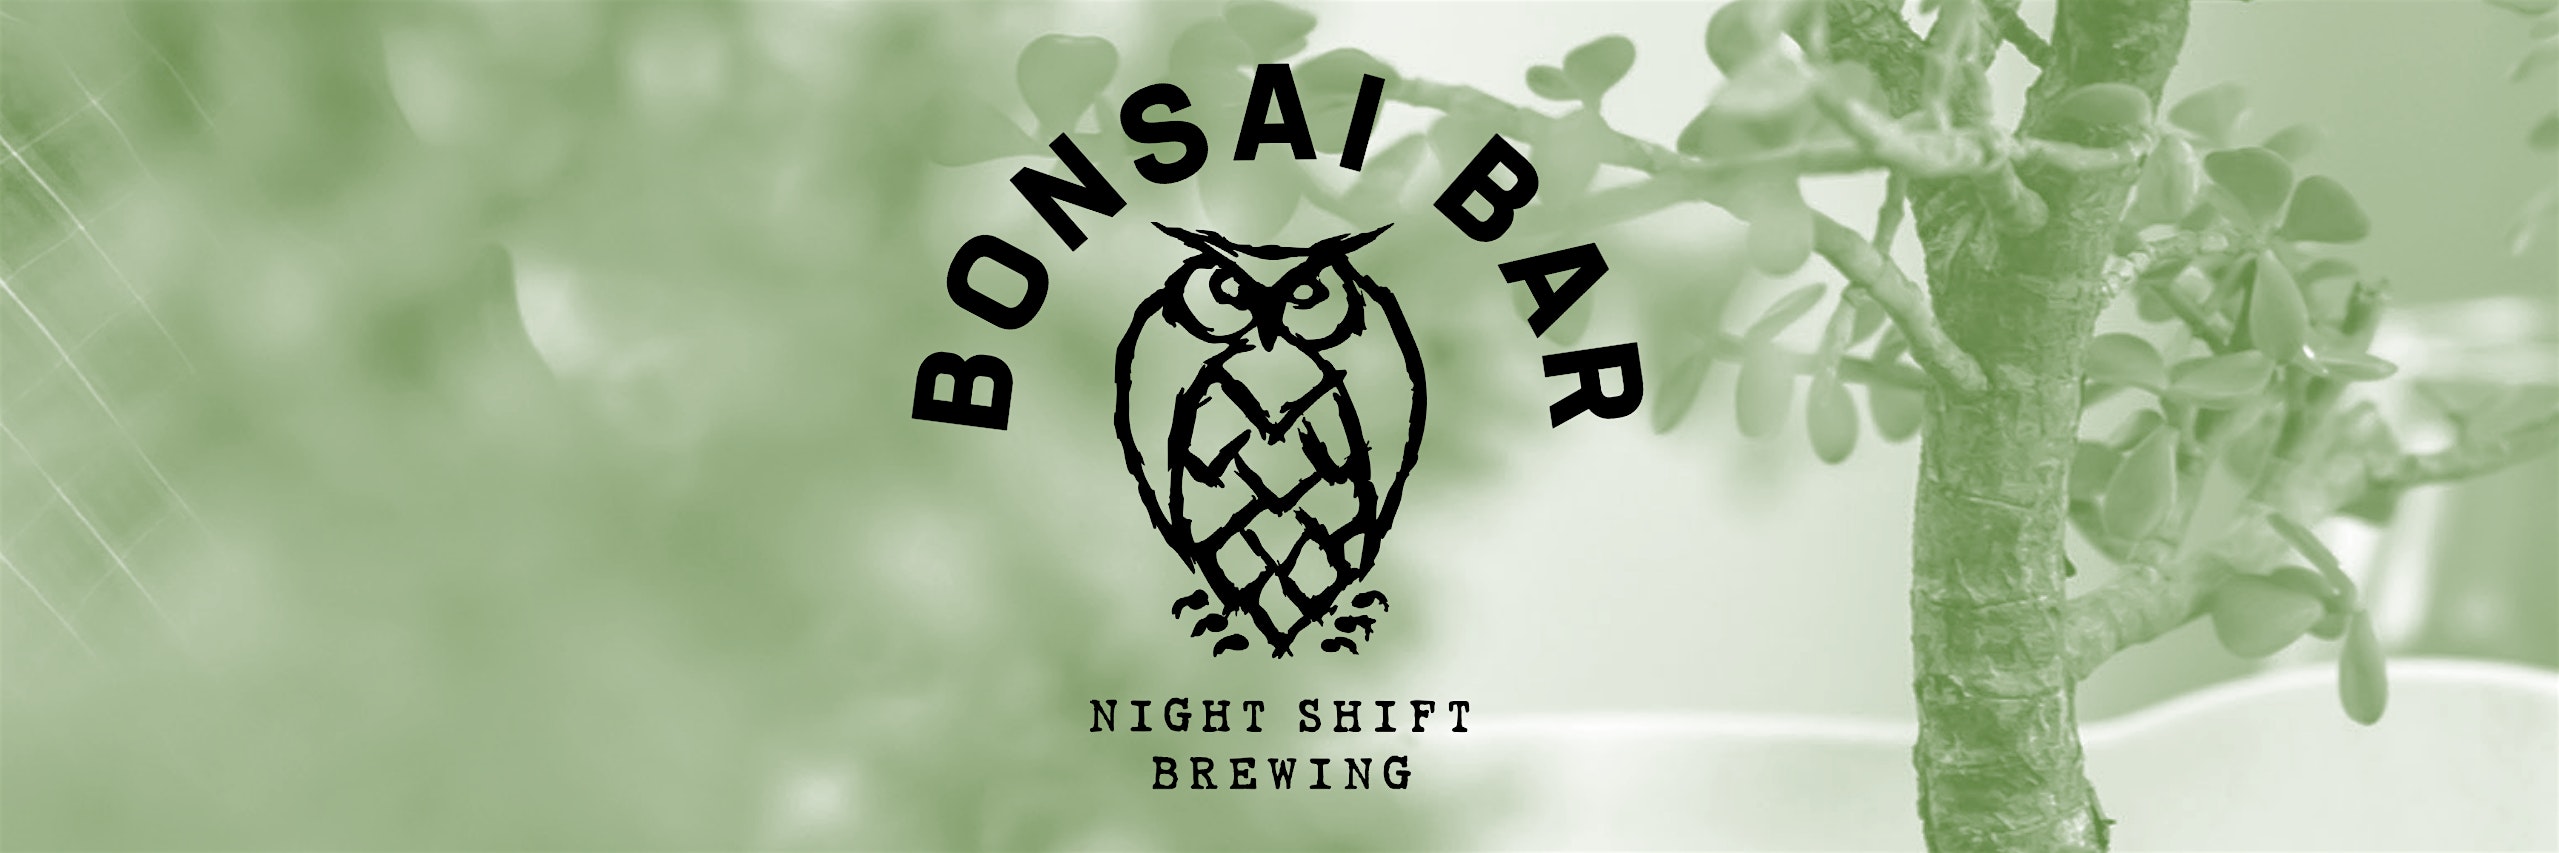 Bonsai Bar @ Night Shift Brewing